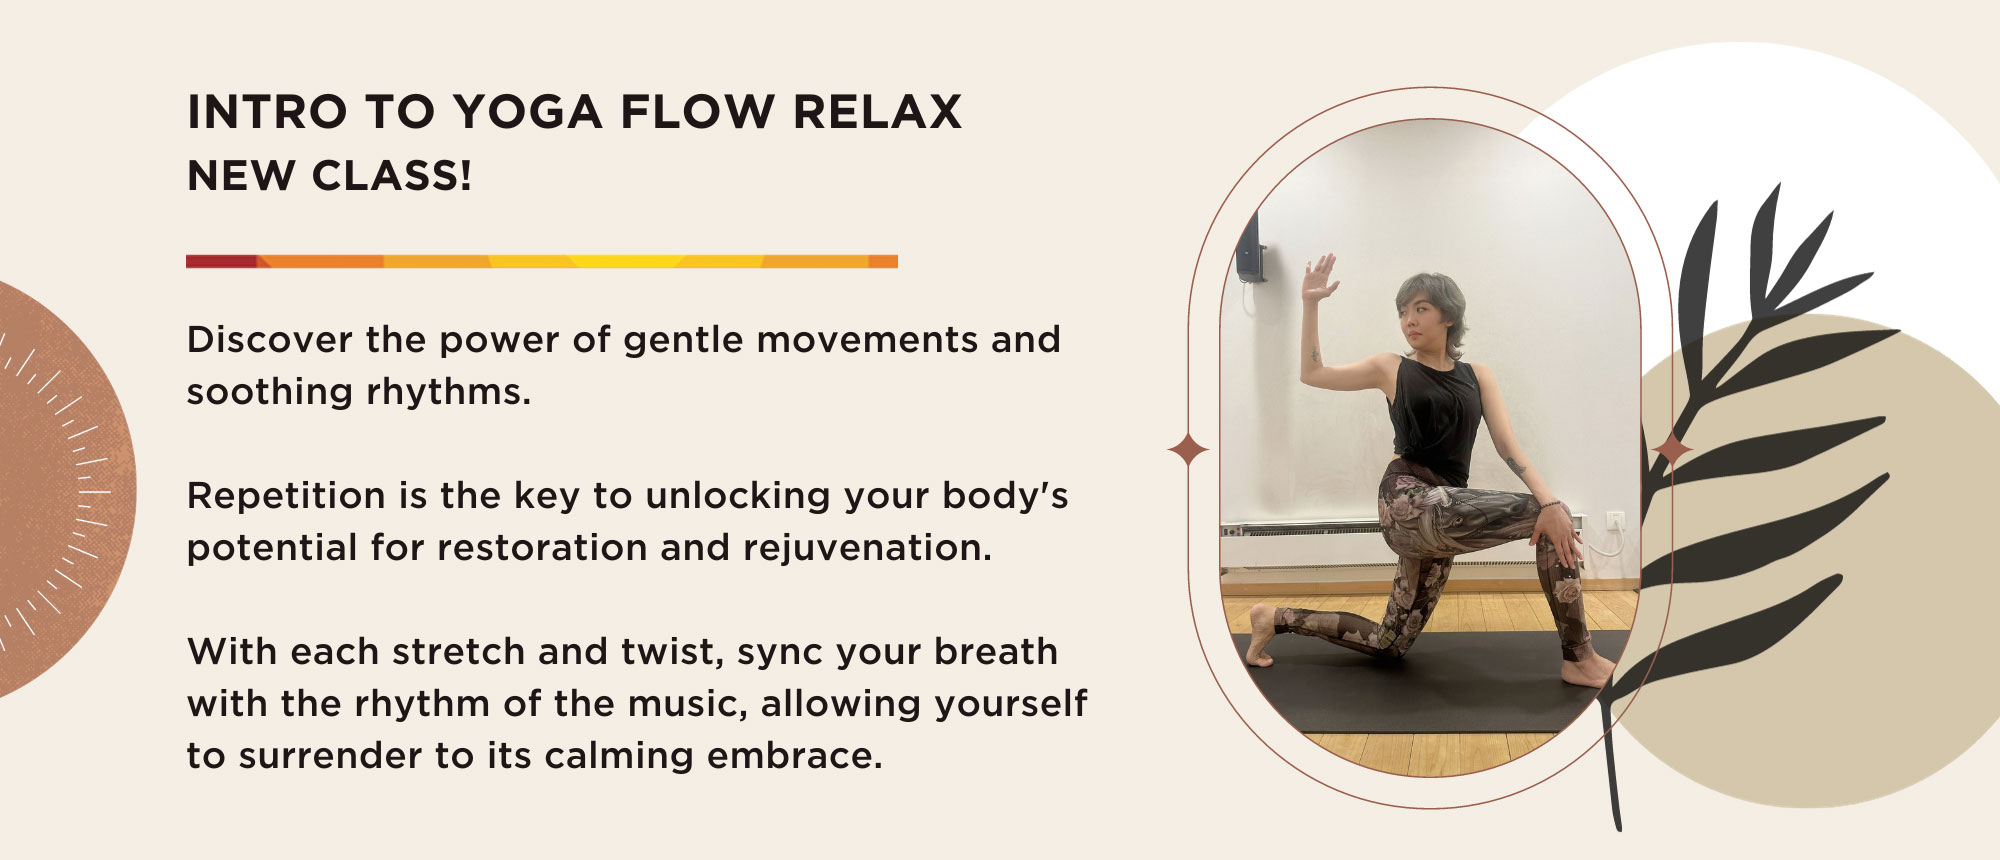 Yoga Flow Relax